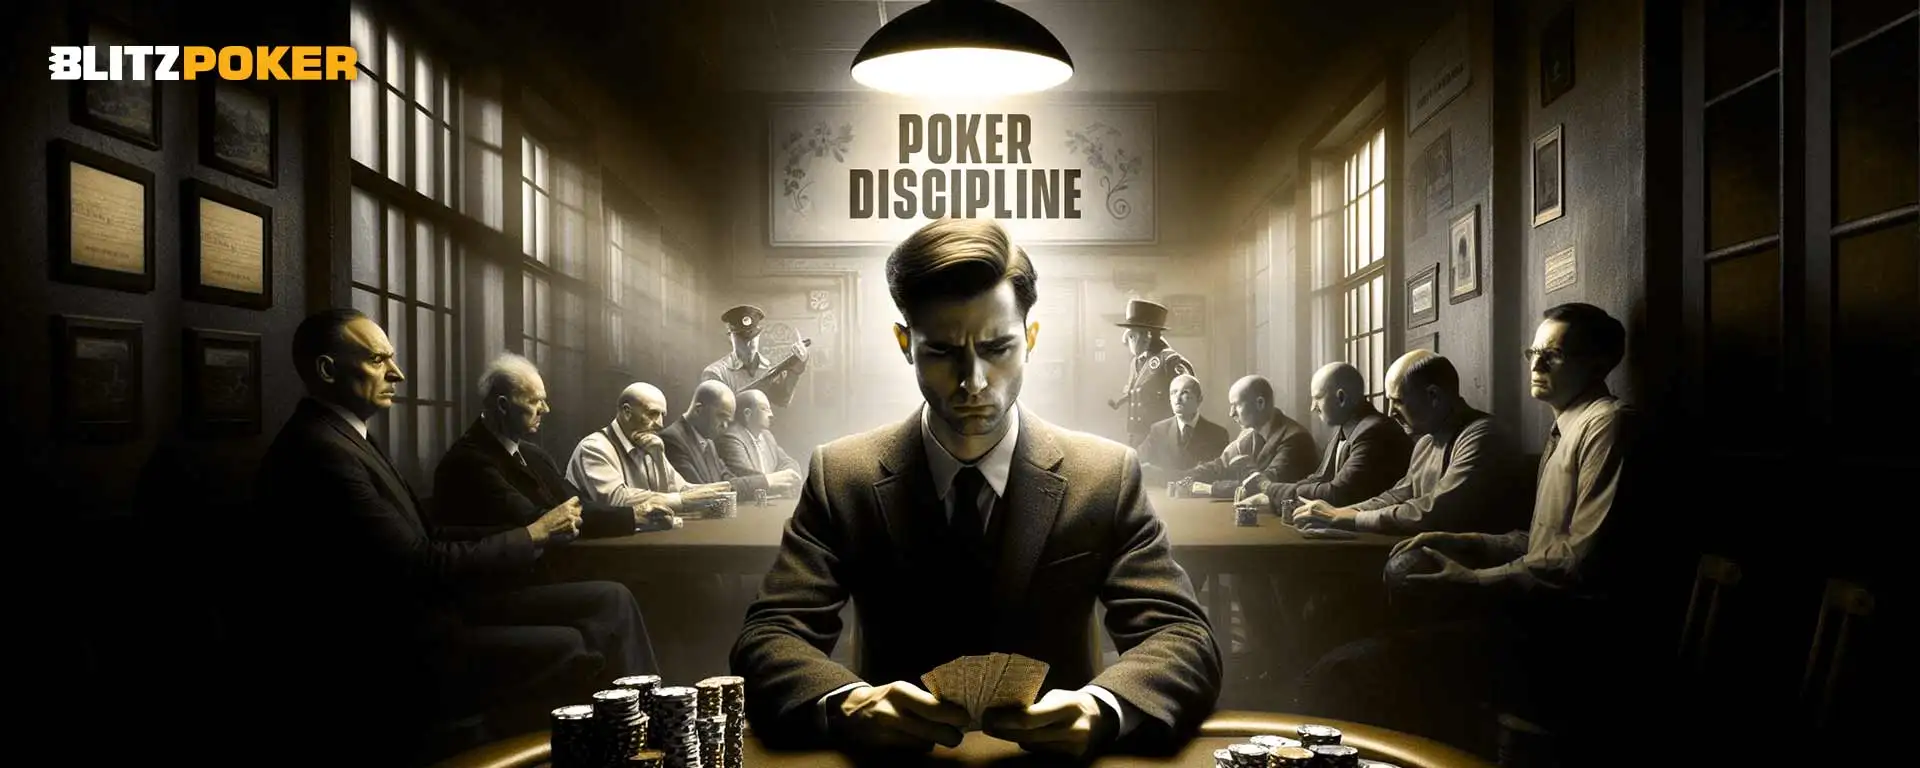 Poker Discipline : Improving Self Control While Playing Poker